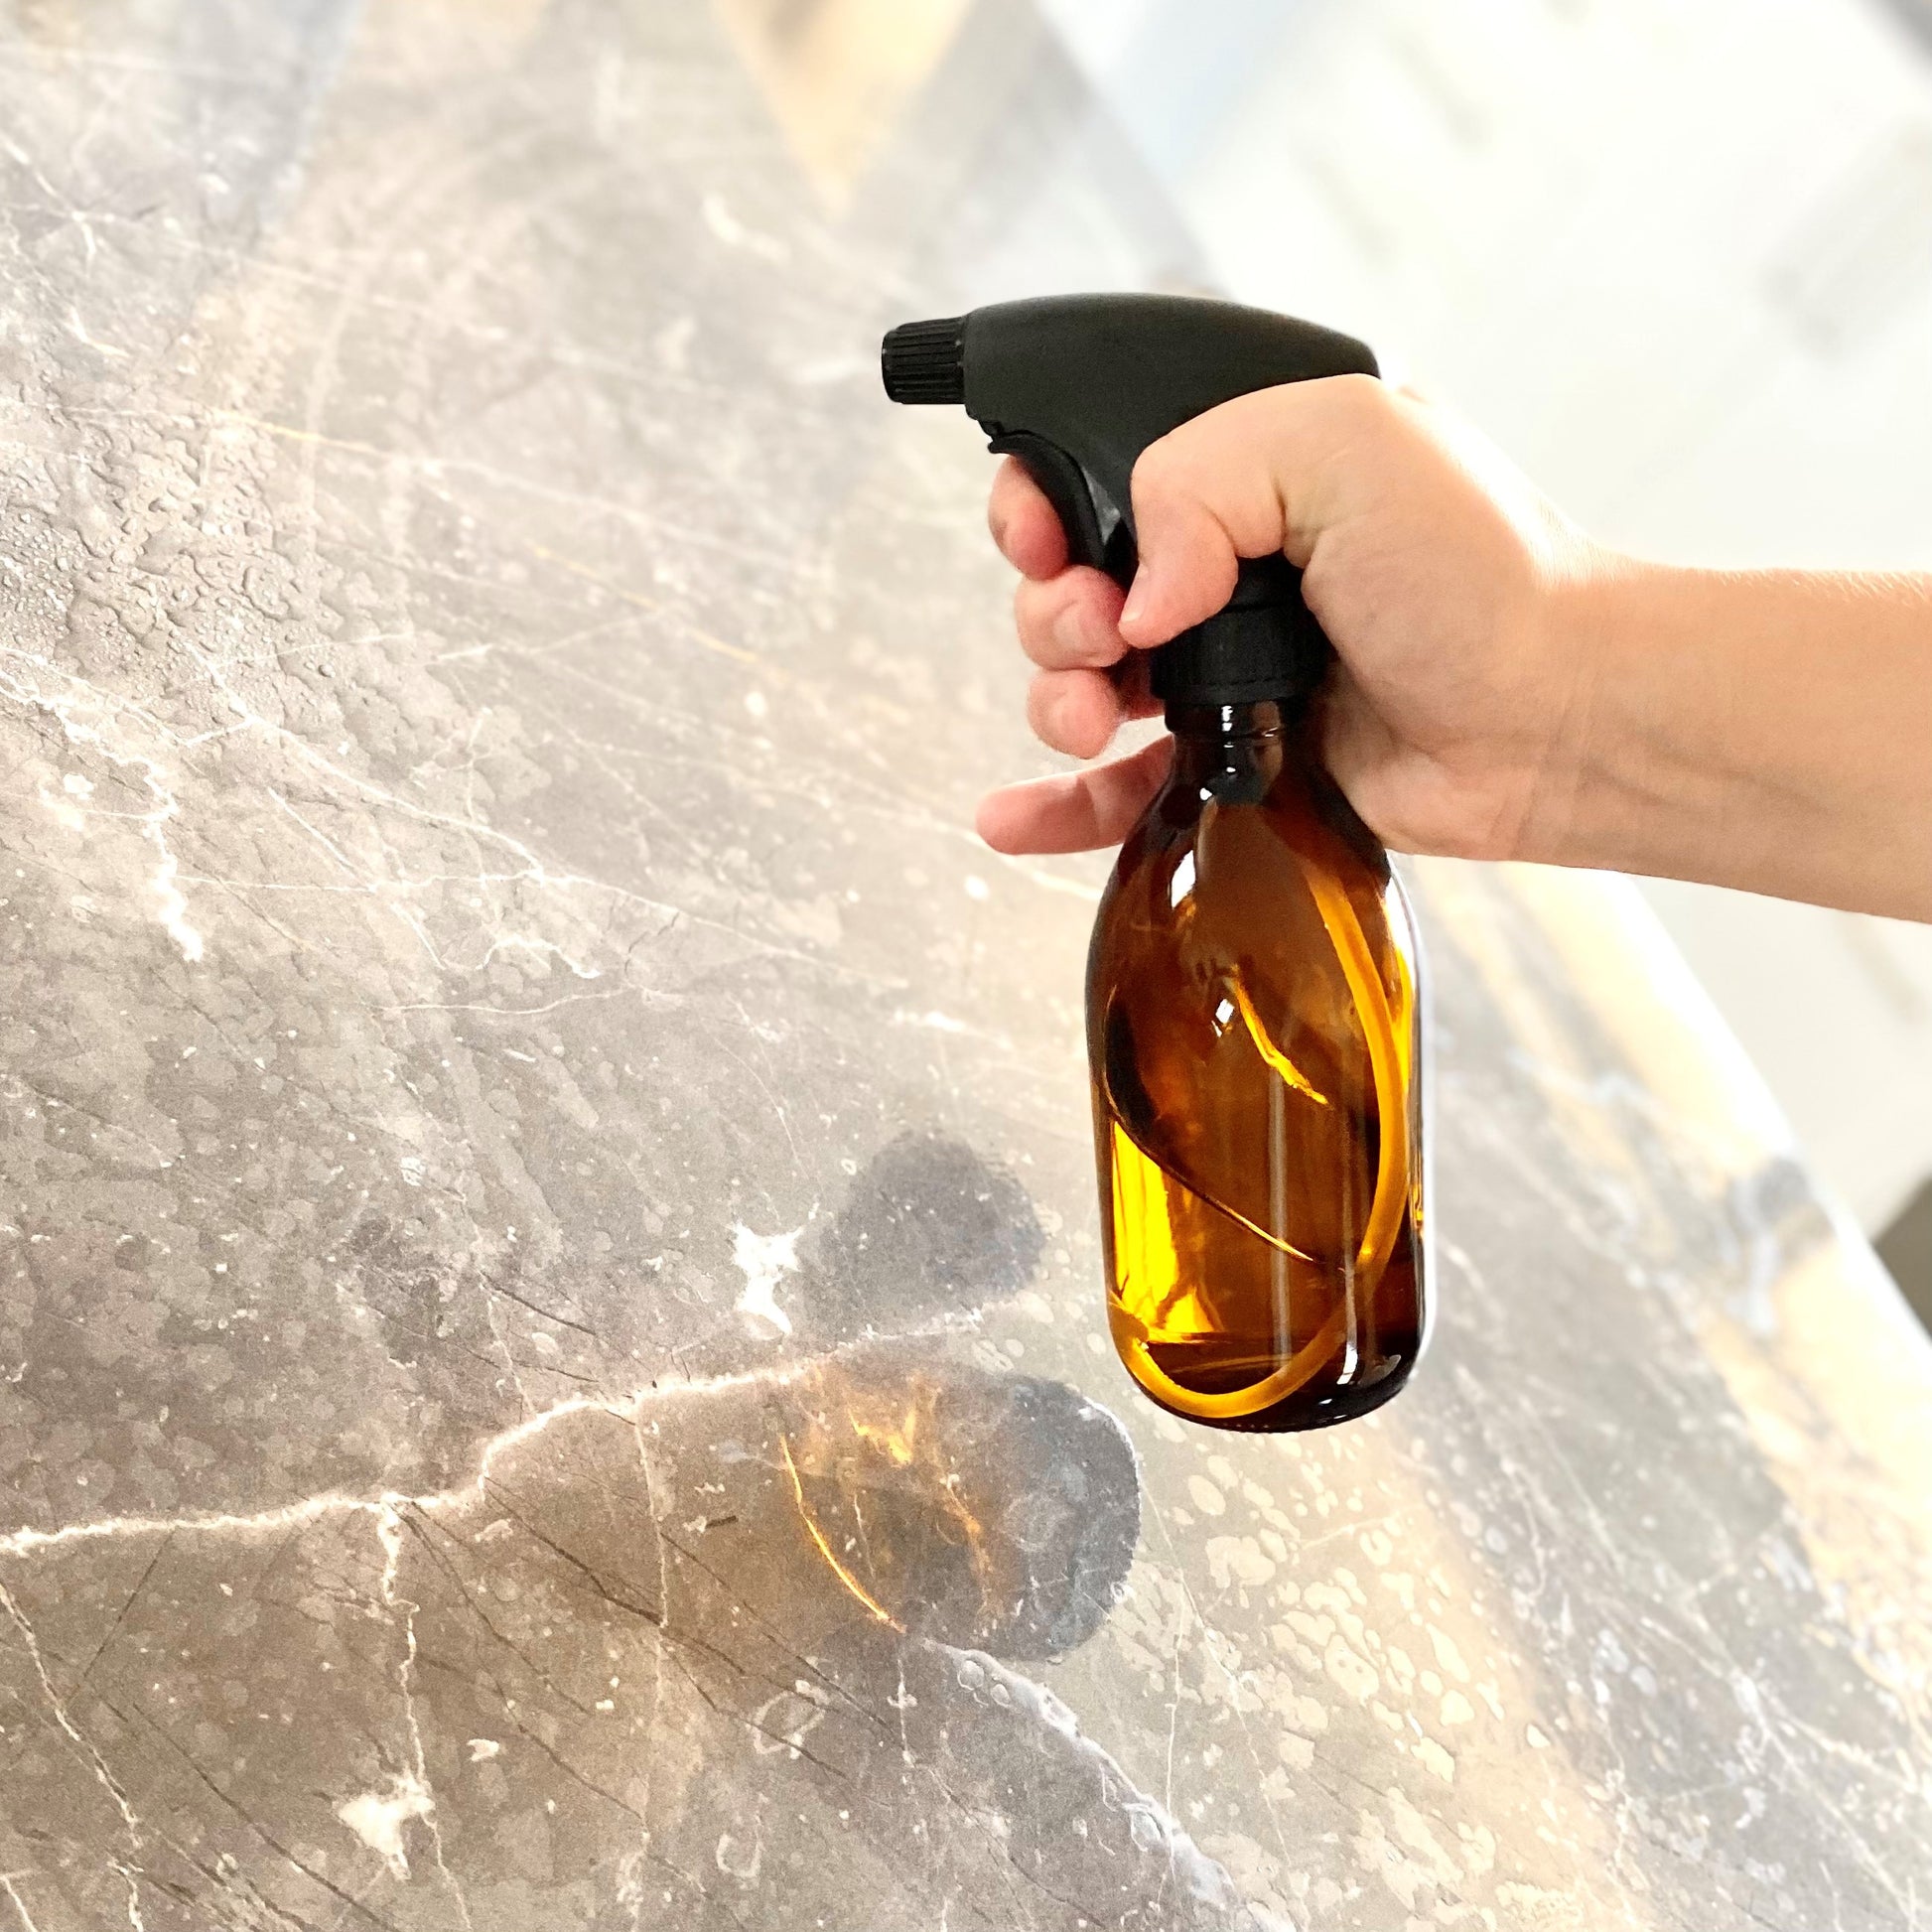 veto_300ml Amber Glass Spray Bottle_ecofriendly cleaning